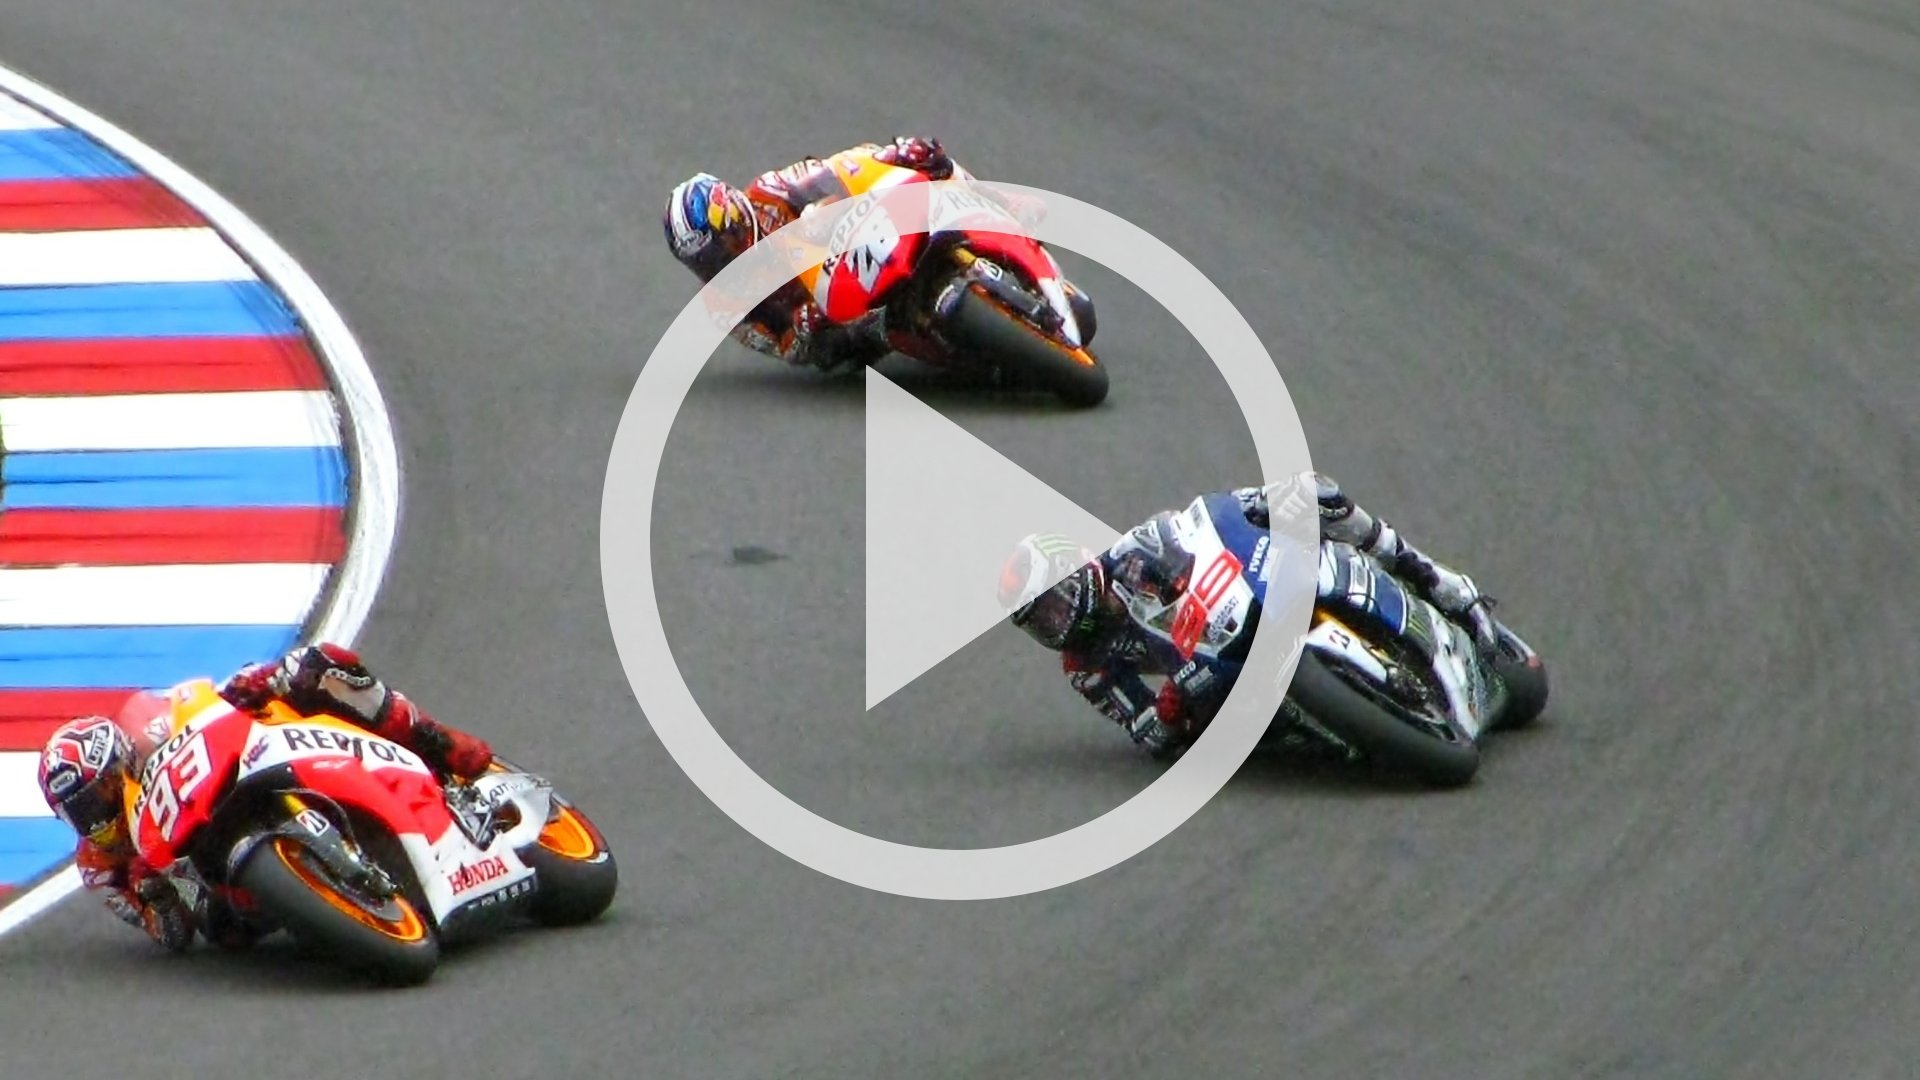 MotoGP Live-Stream Heute Katar GP (Doha) live auf Eurosport